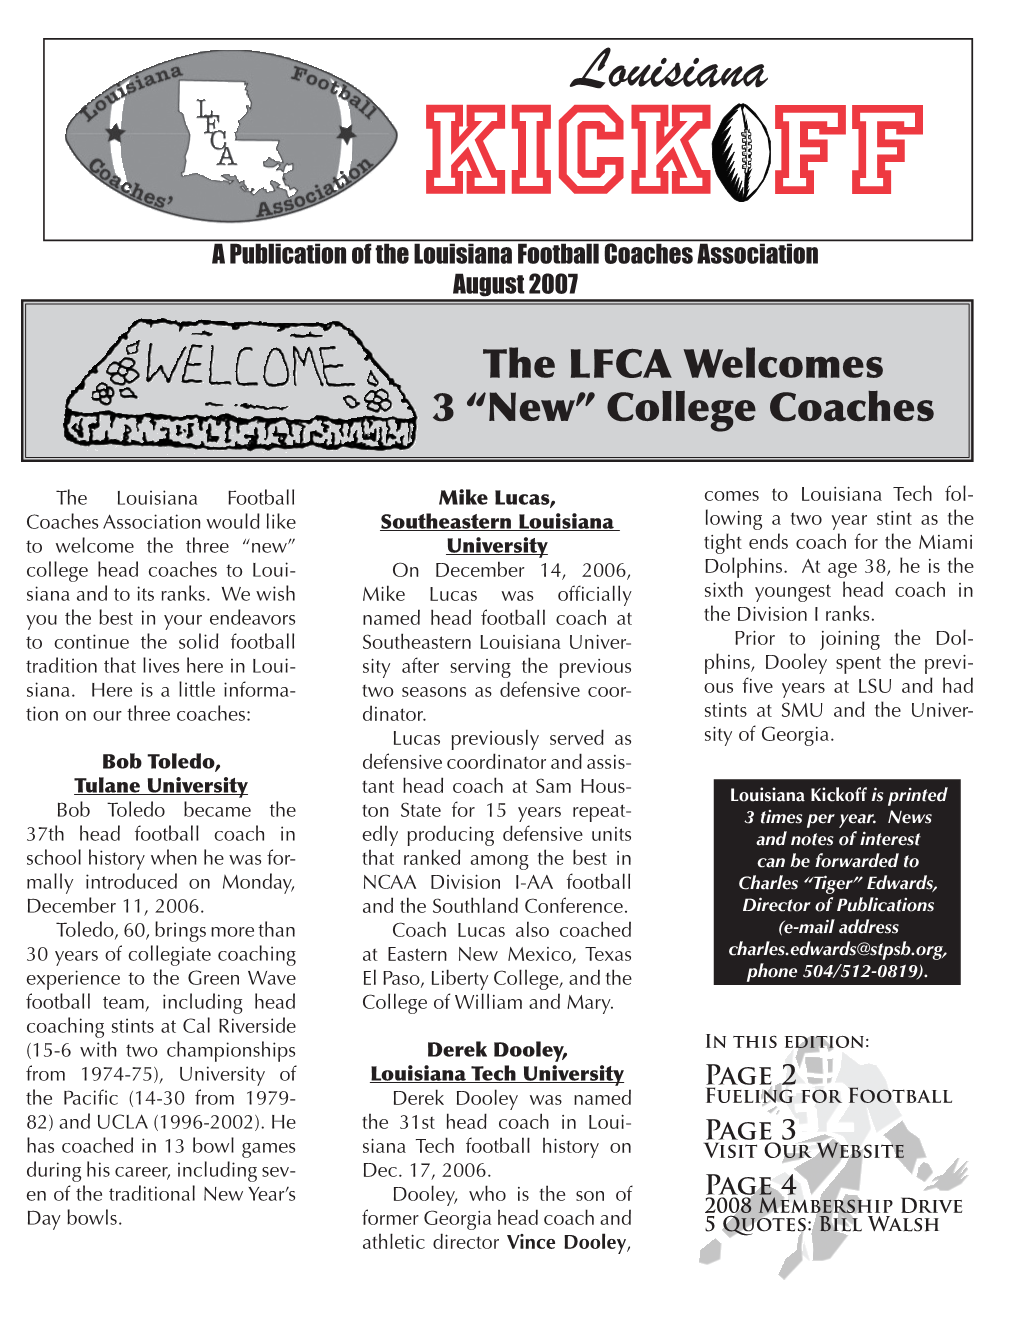 Louisiana KICK FF a Publication of the Louisiana Football Coaches Association August 2007